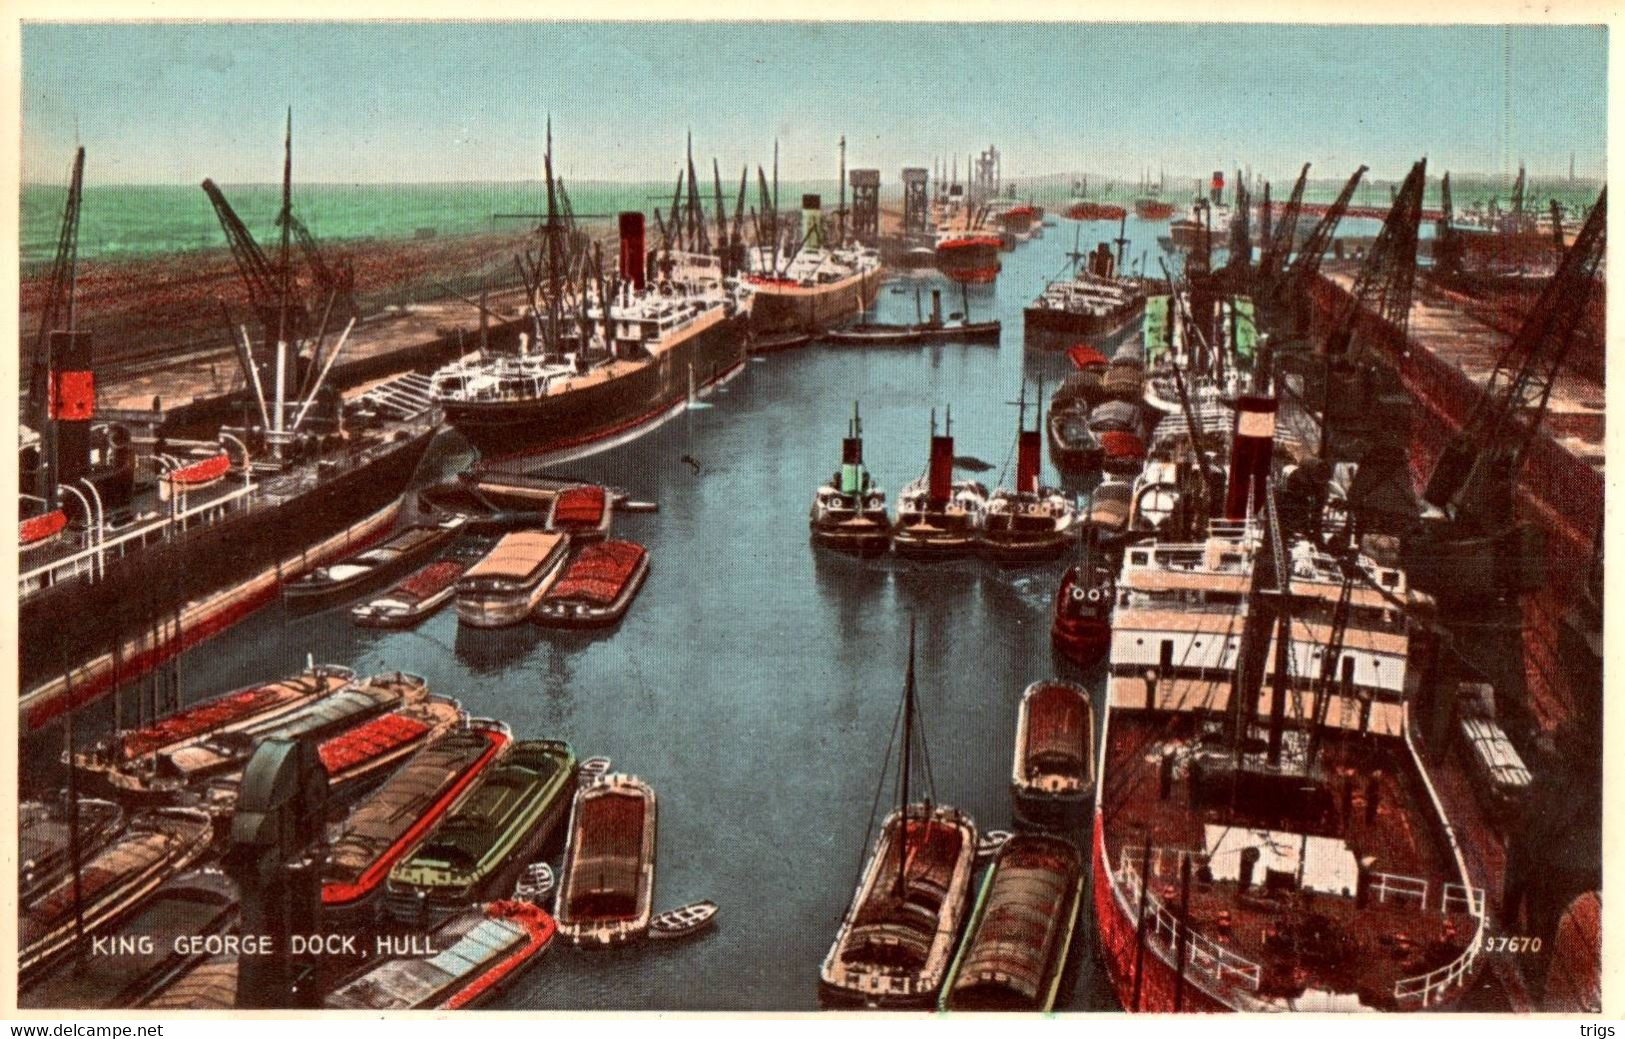 Hull - King George Dock - Hull